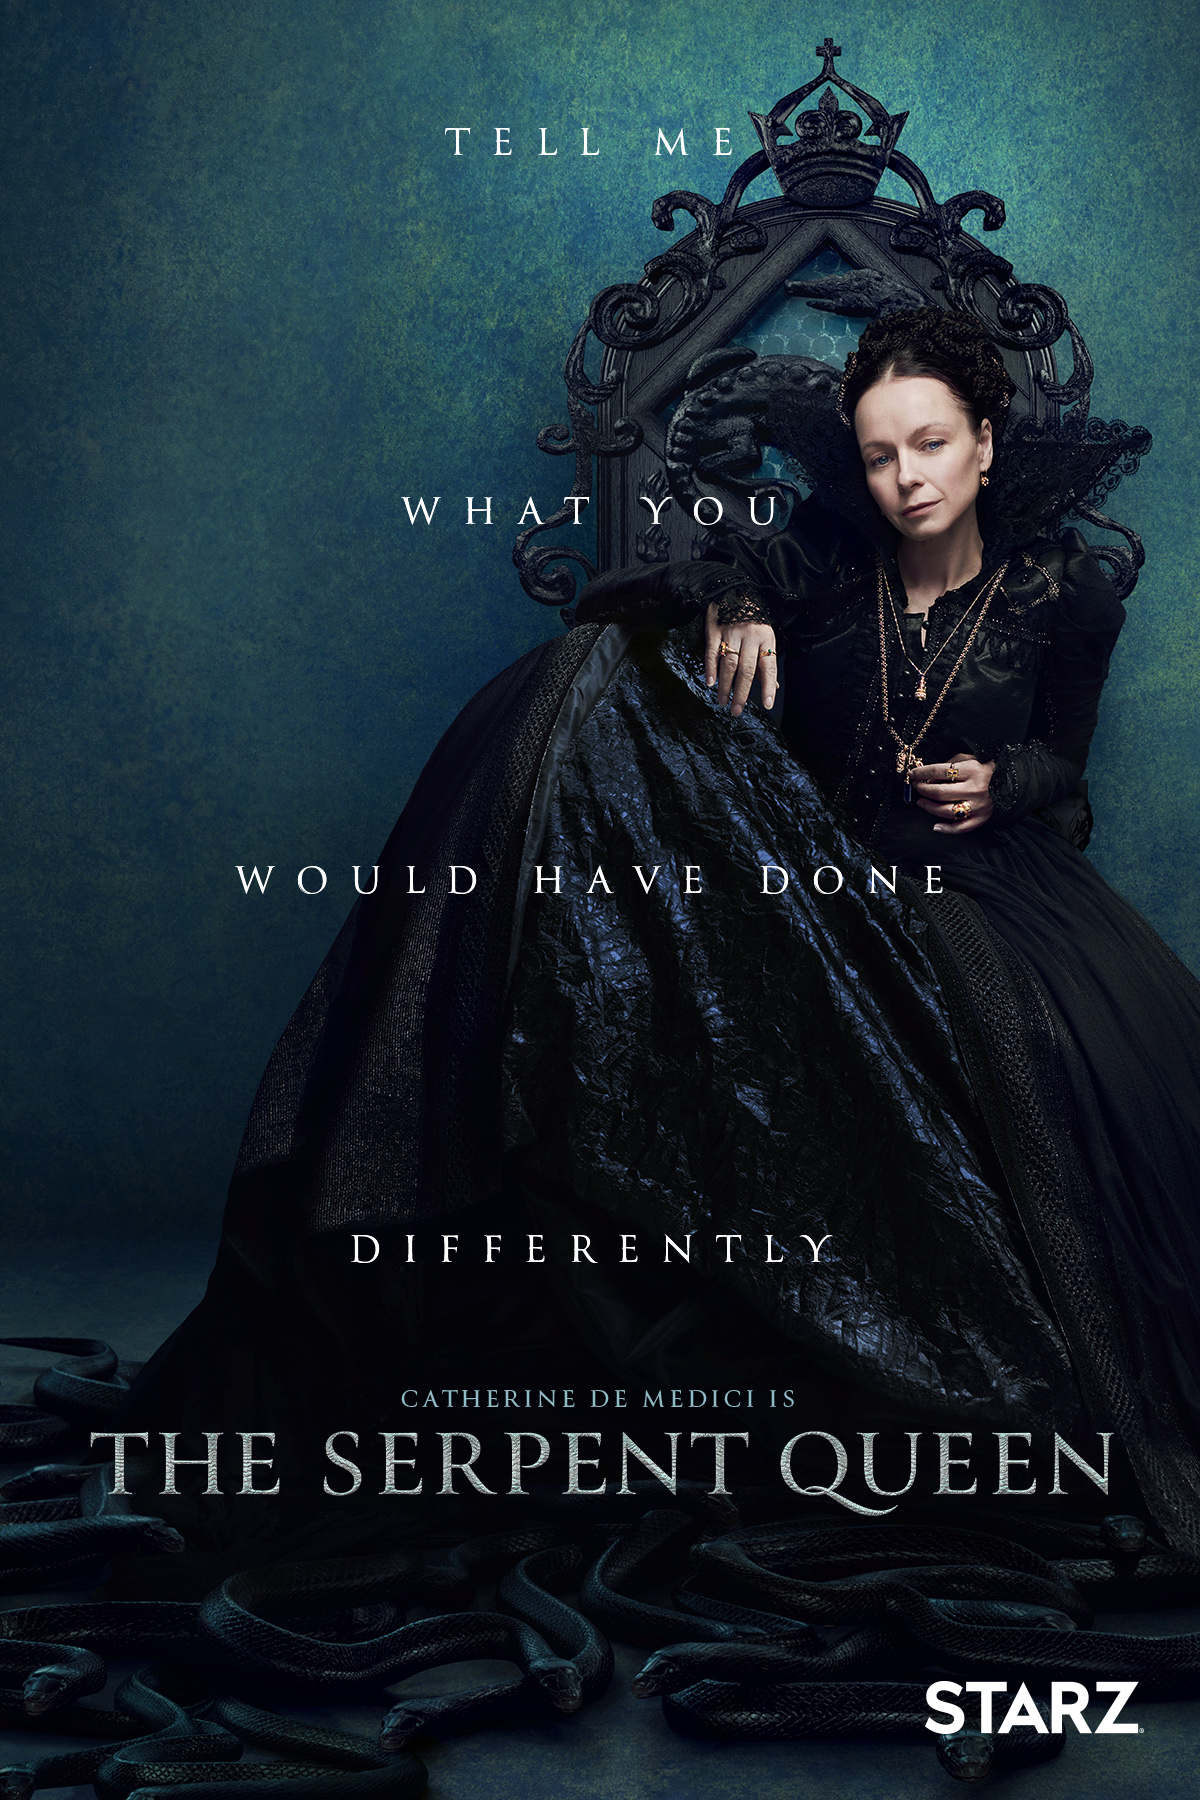 The Serpent Queen Season 1 Episode 8